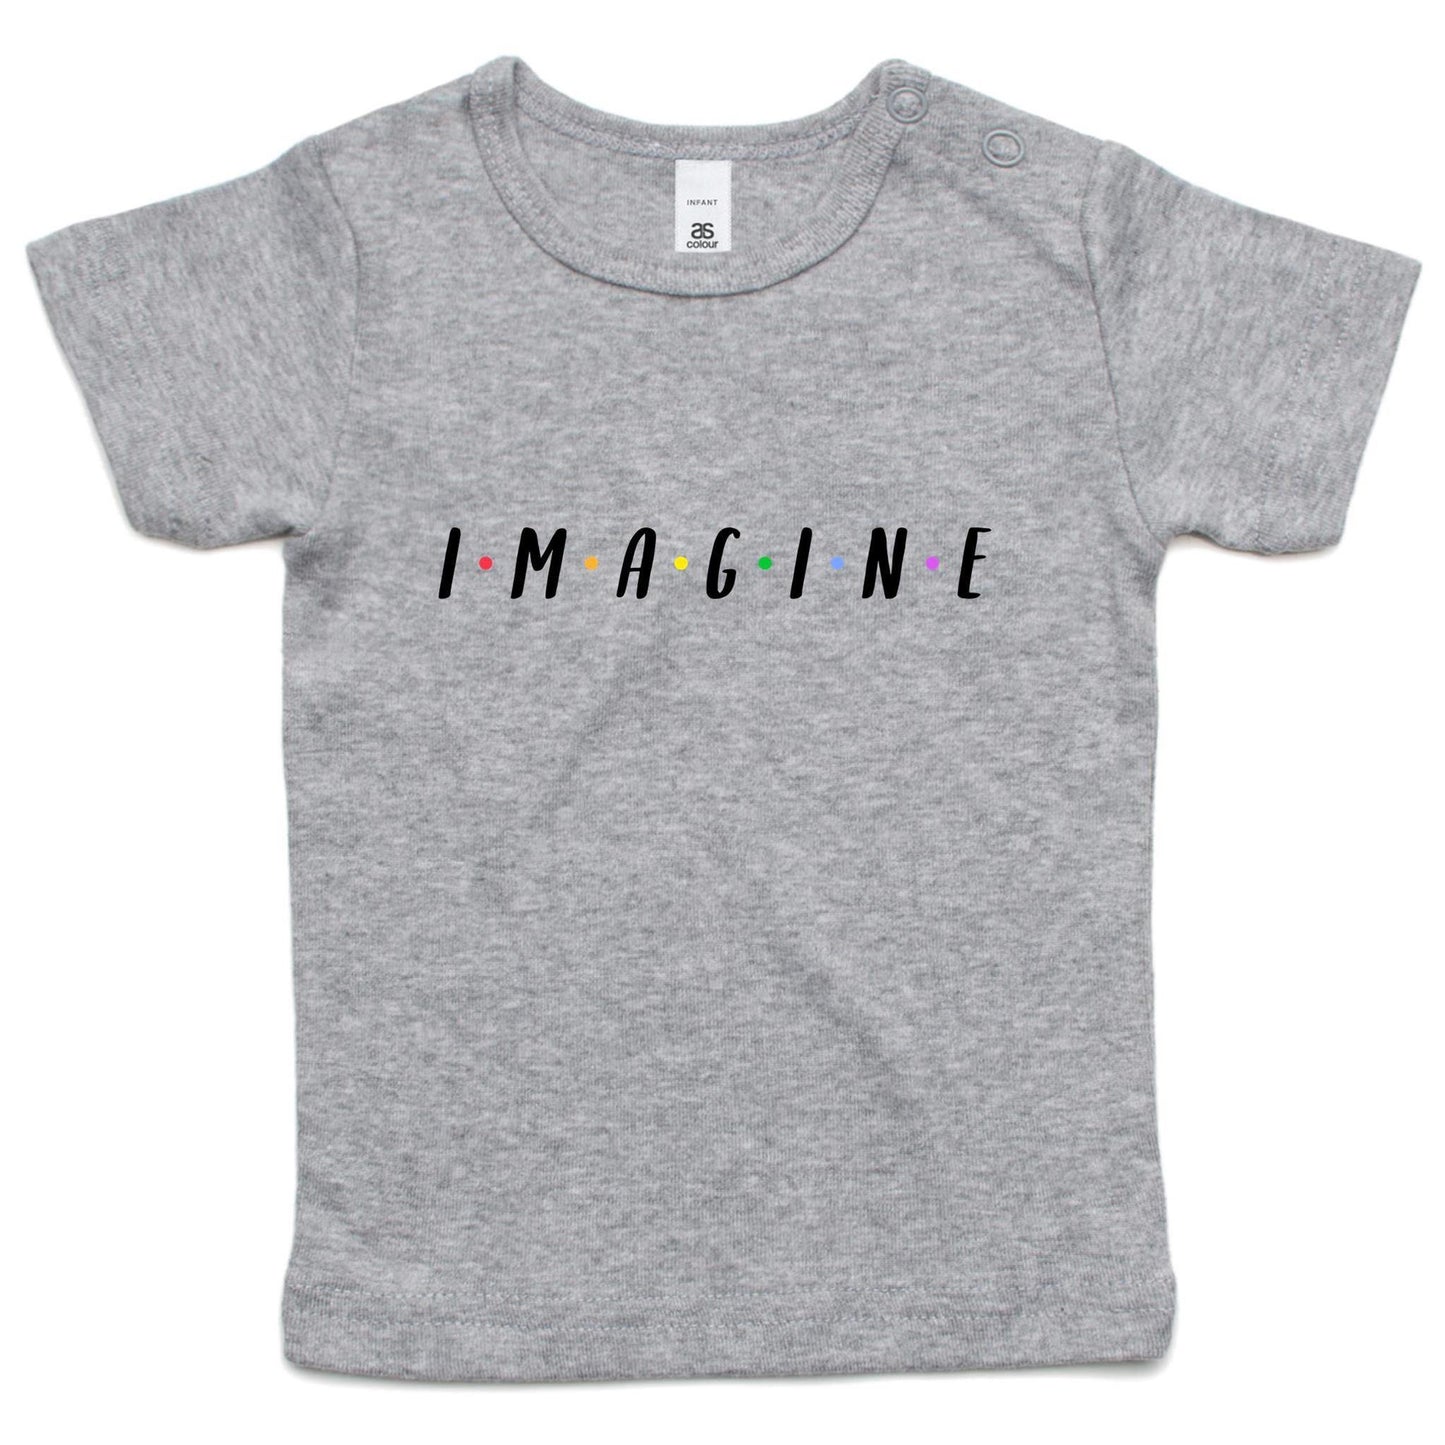 Imagine - Baby T-shirt Grey Marle Baby T-shirt kids